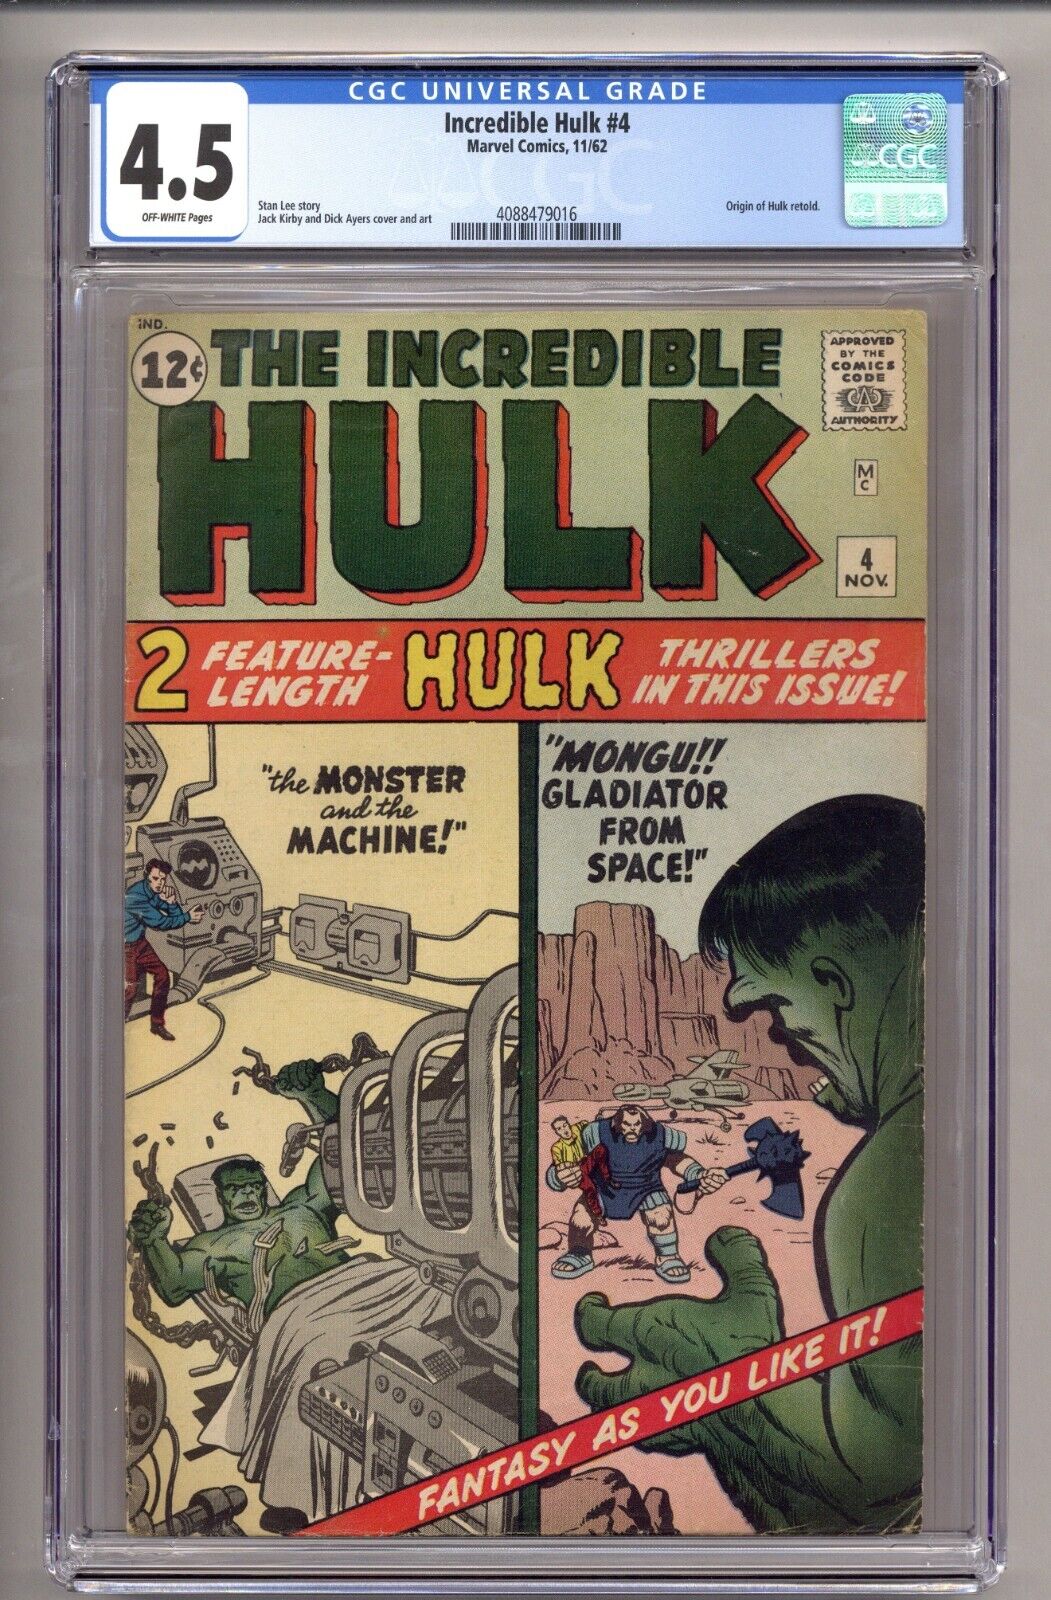 Incredible Hulk 4 CGC 45 Origin of Hulk retold Jack Kirby 1962 Marvel J663